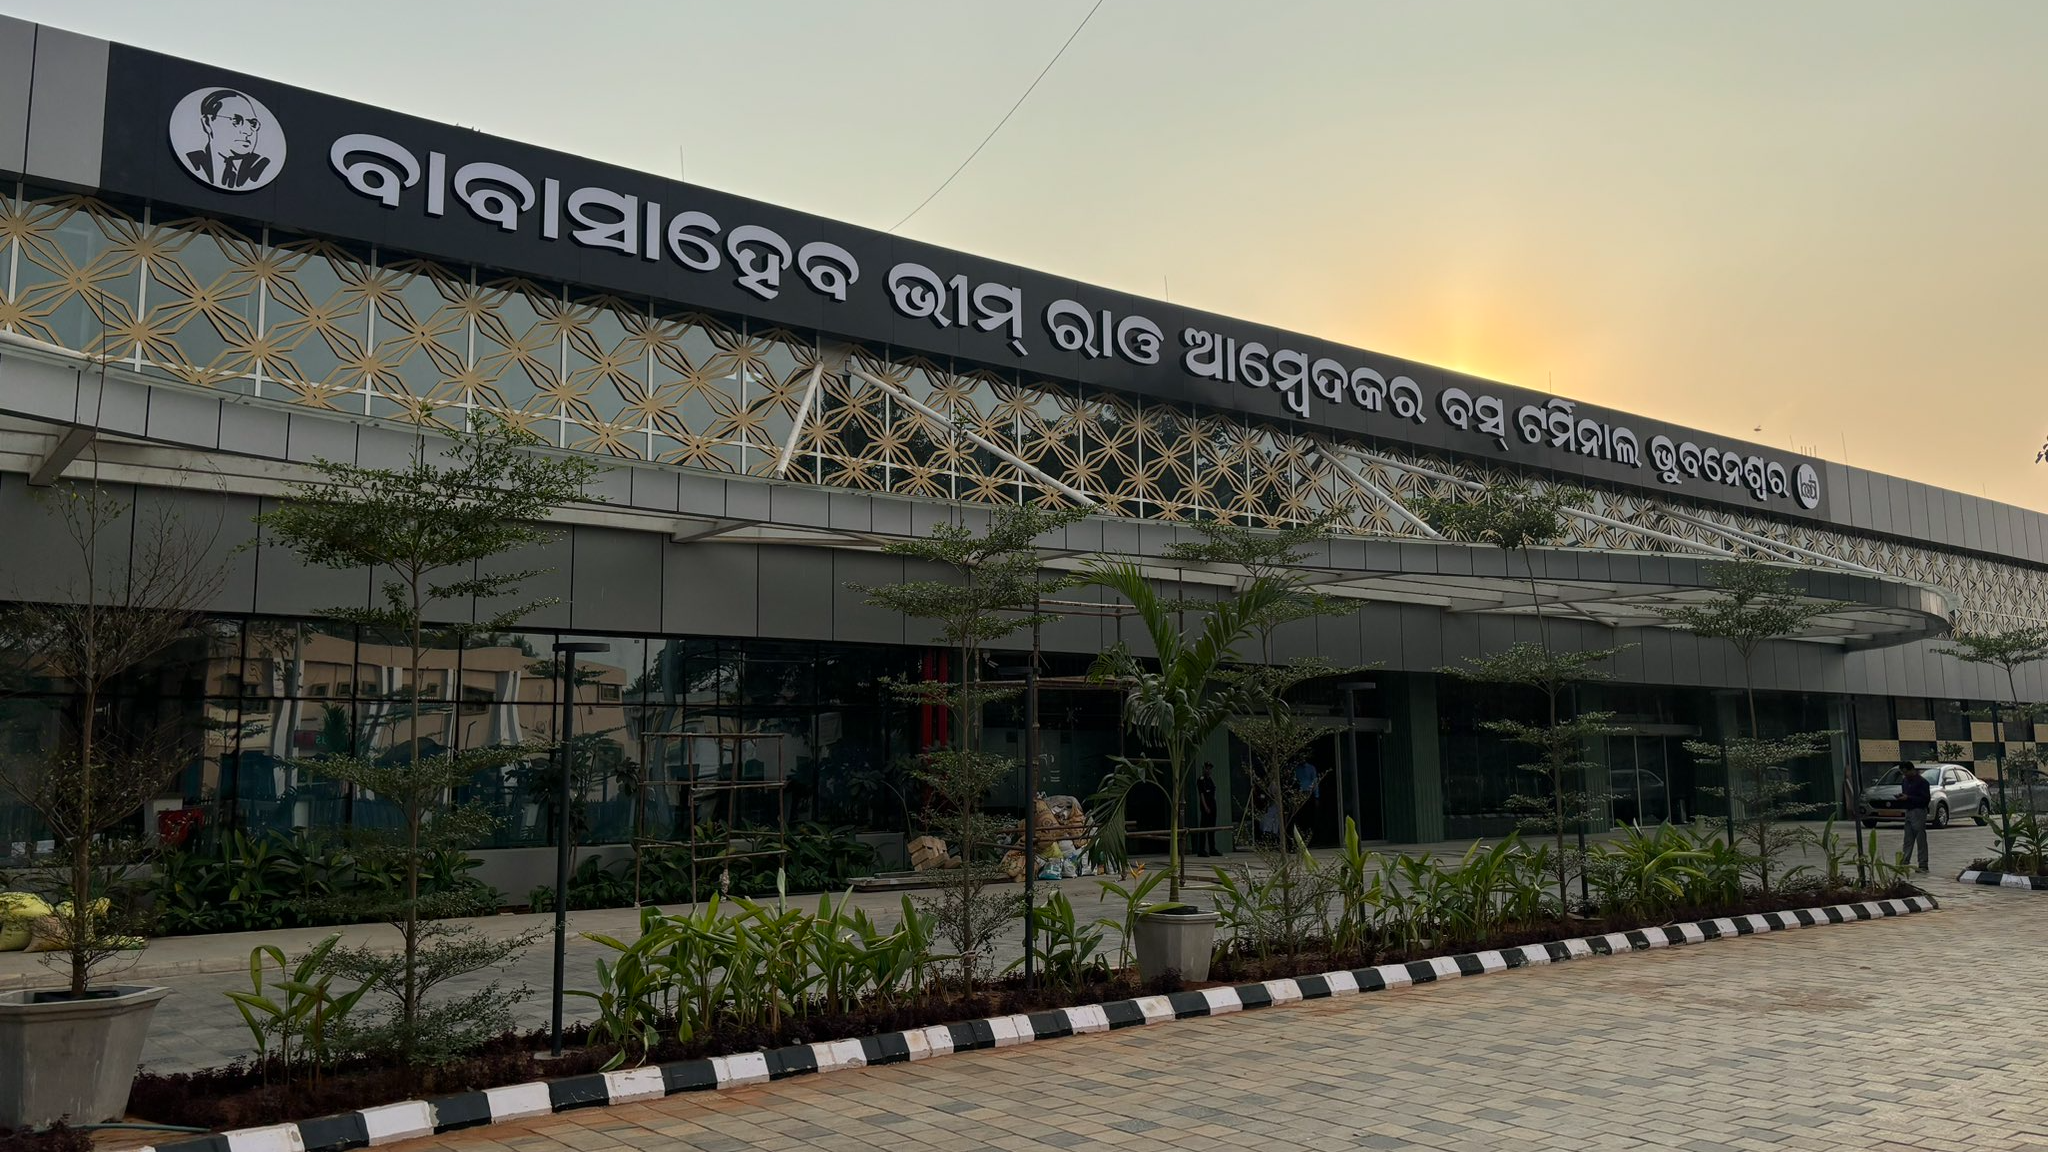 Odisha Chief Minister Naveen Patnaik will inaugurate the Rs 800-crore parikrama project